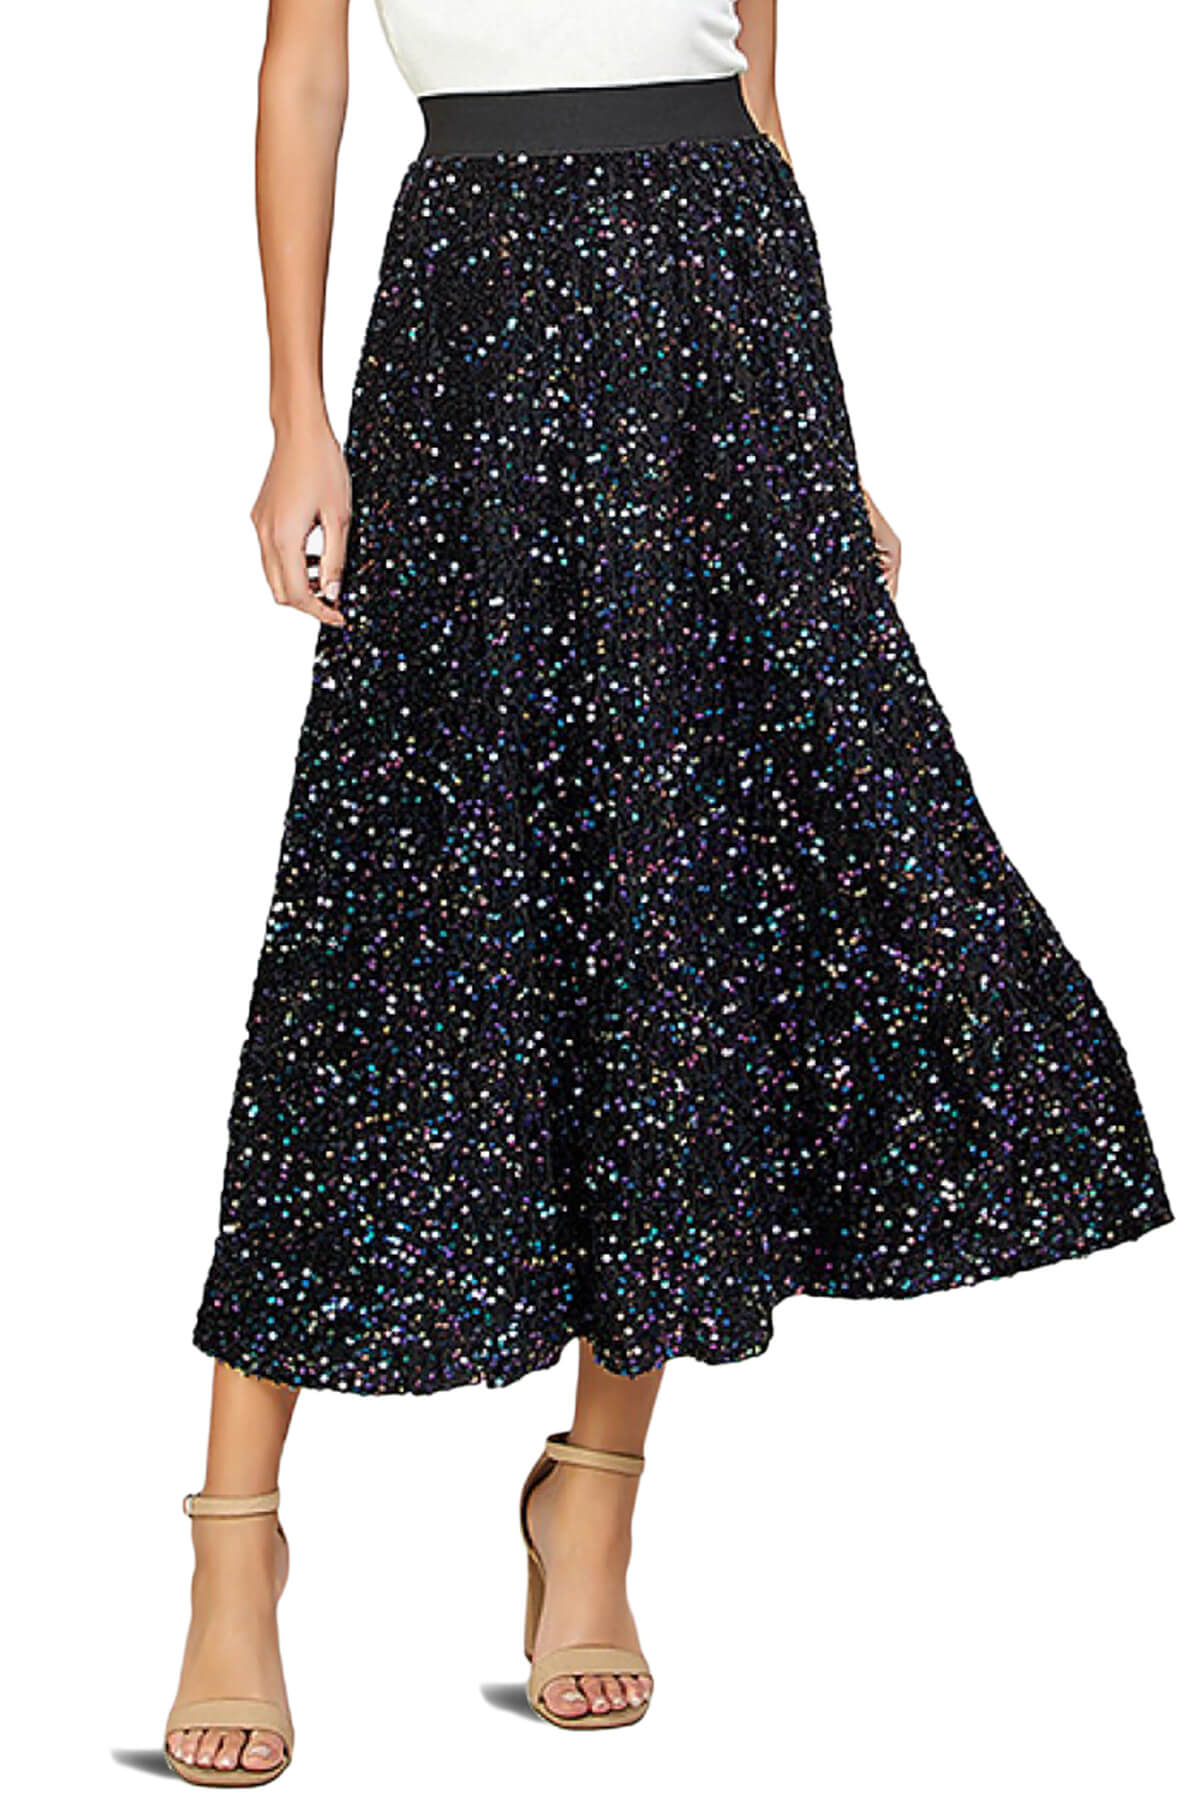 TheMogan Women's Sparkly Sequin Maxi Skirt Elastic High Waist A-Line Party Long Skirts